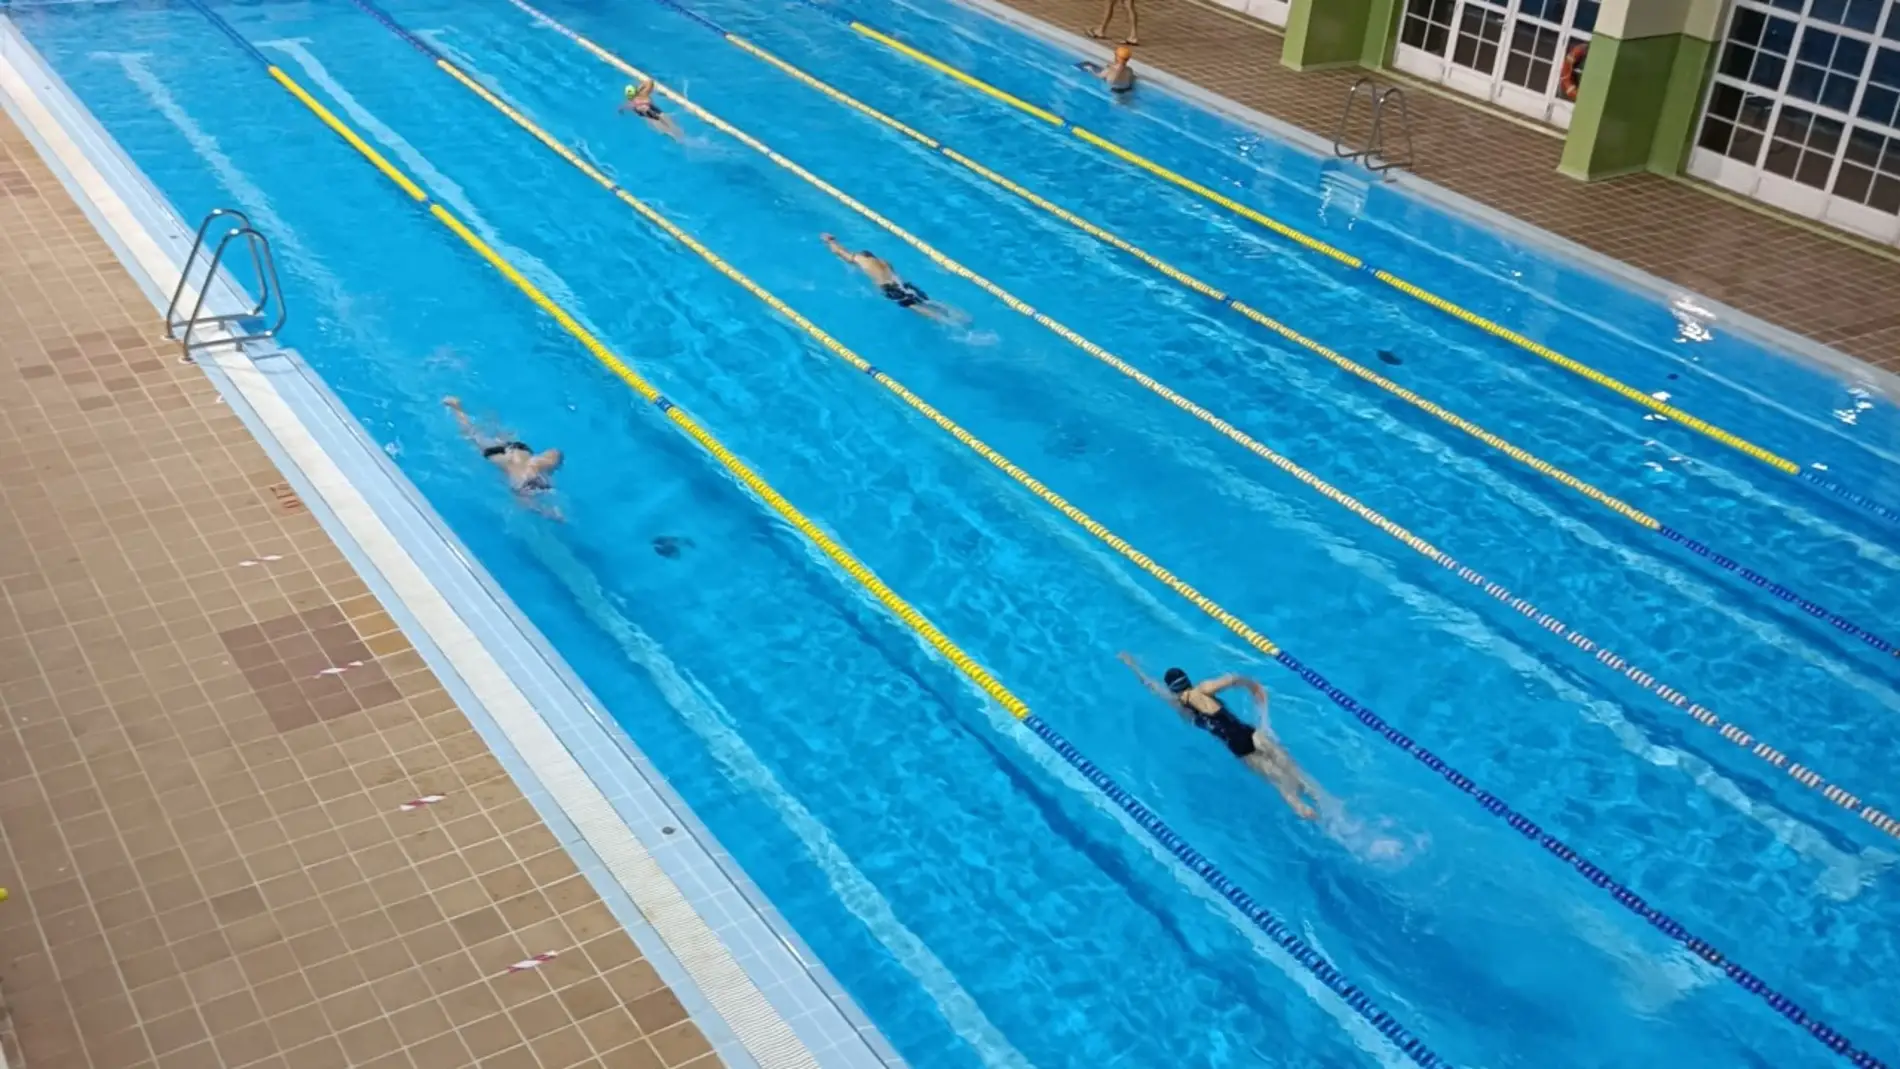 Aguilar retoma las actividades en las piscinas climatizadas